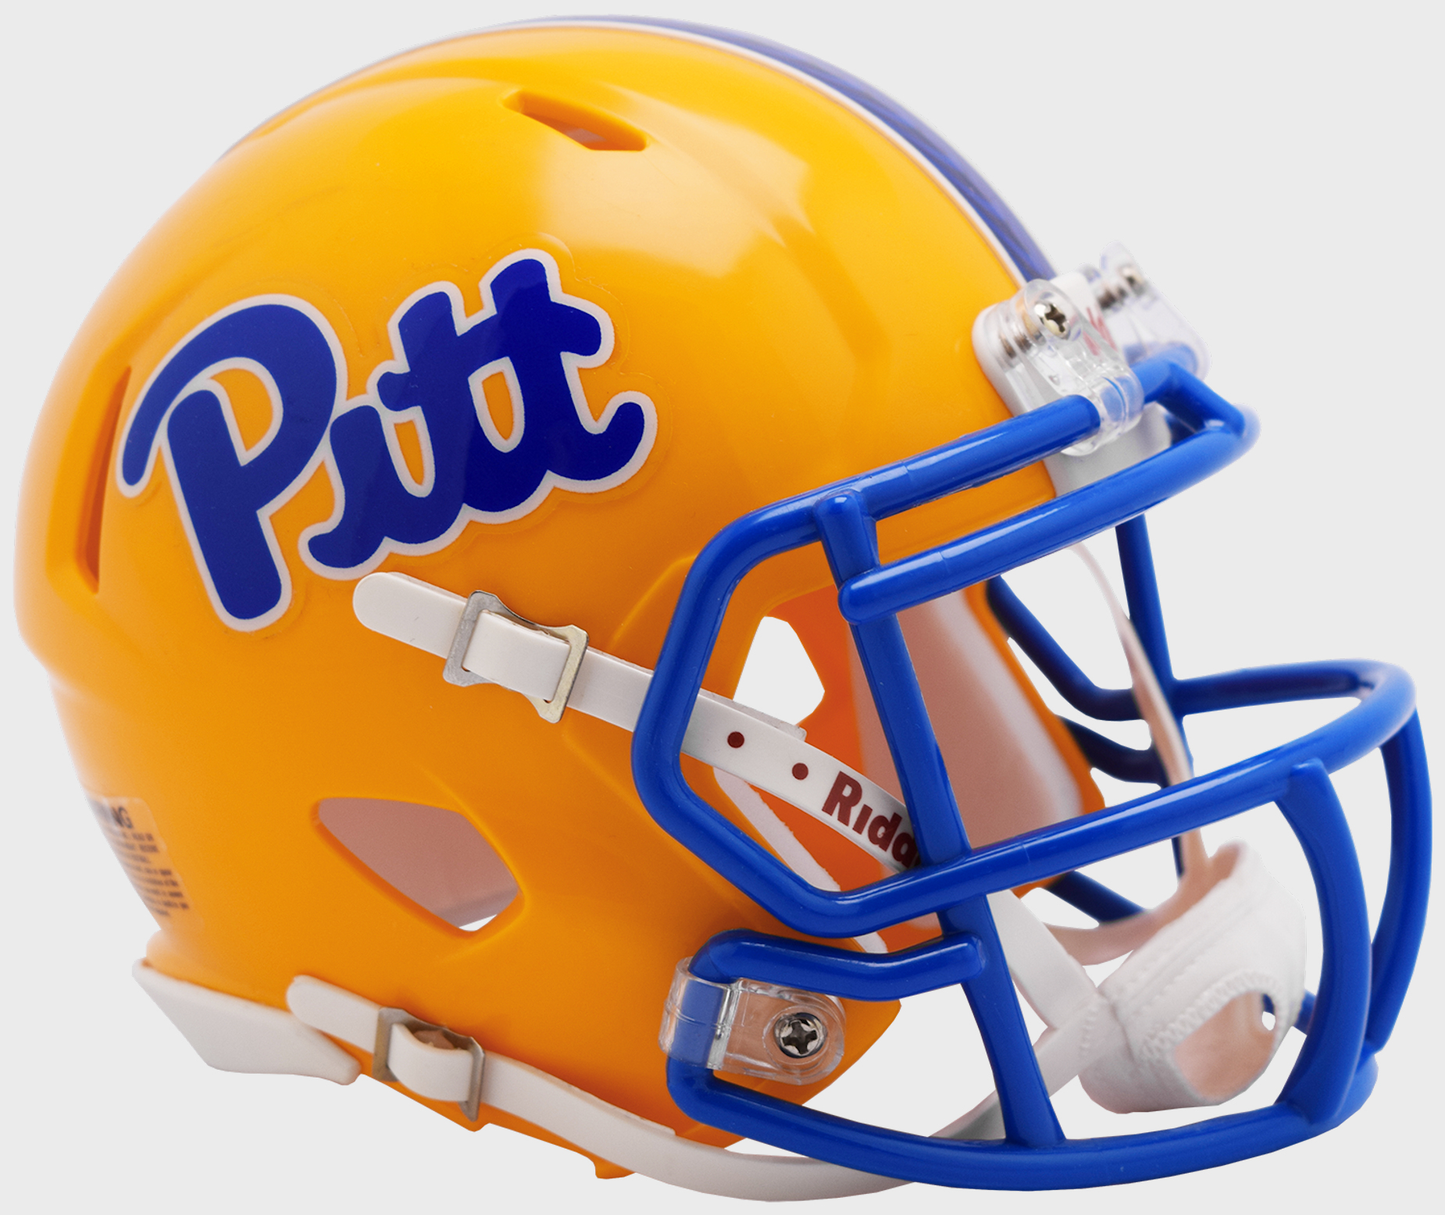 Pittsburgh Panthers mini helmet